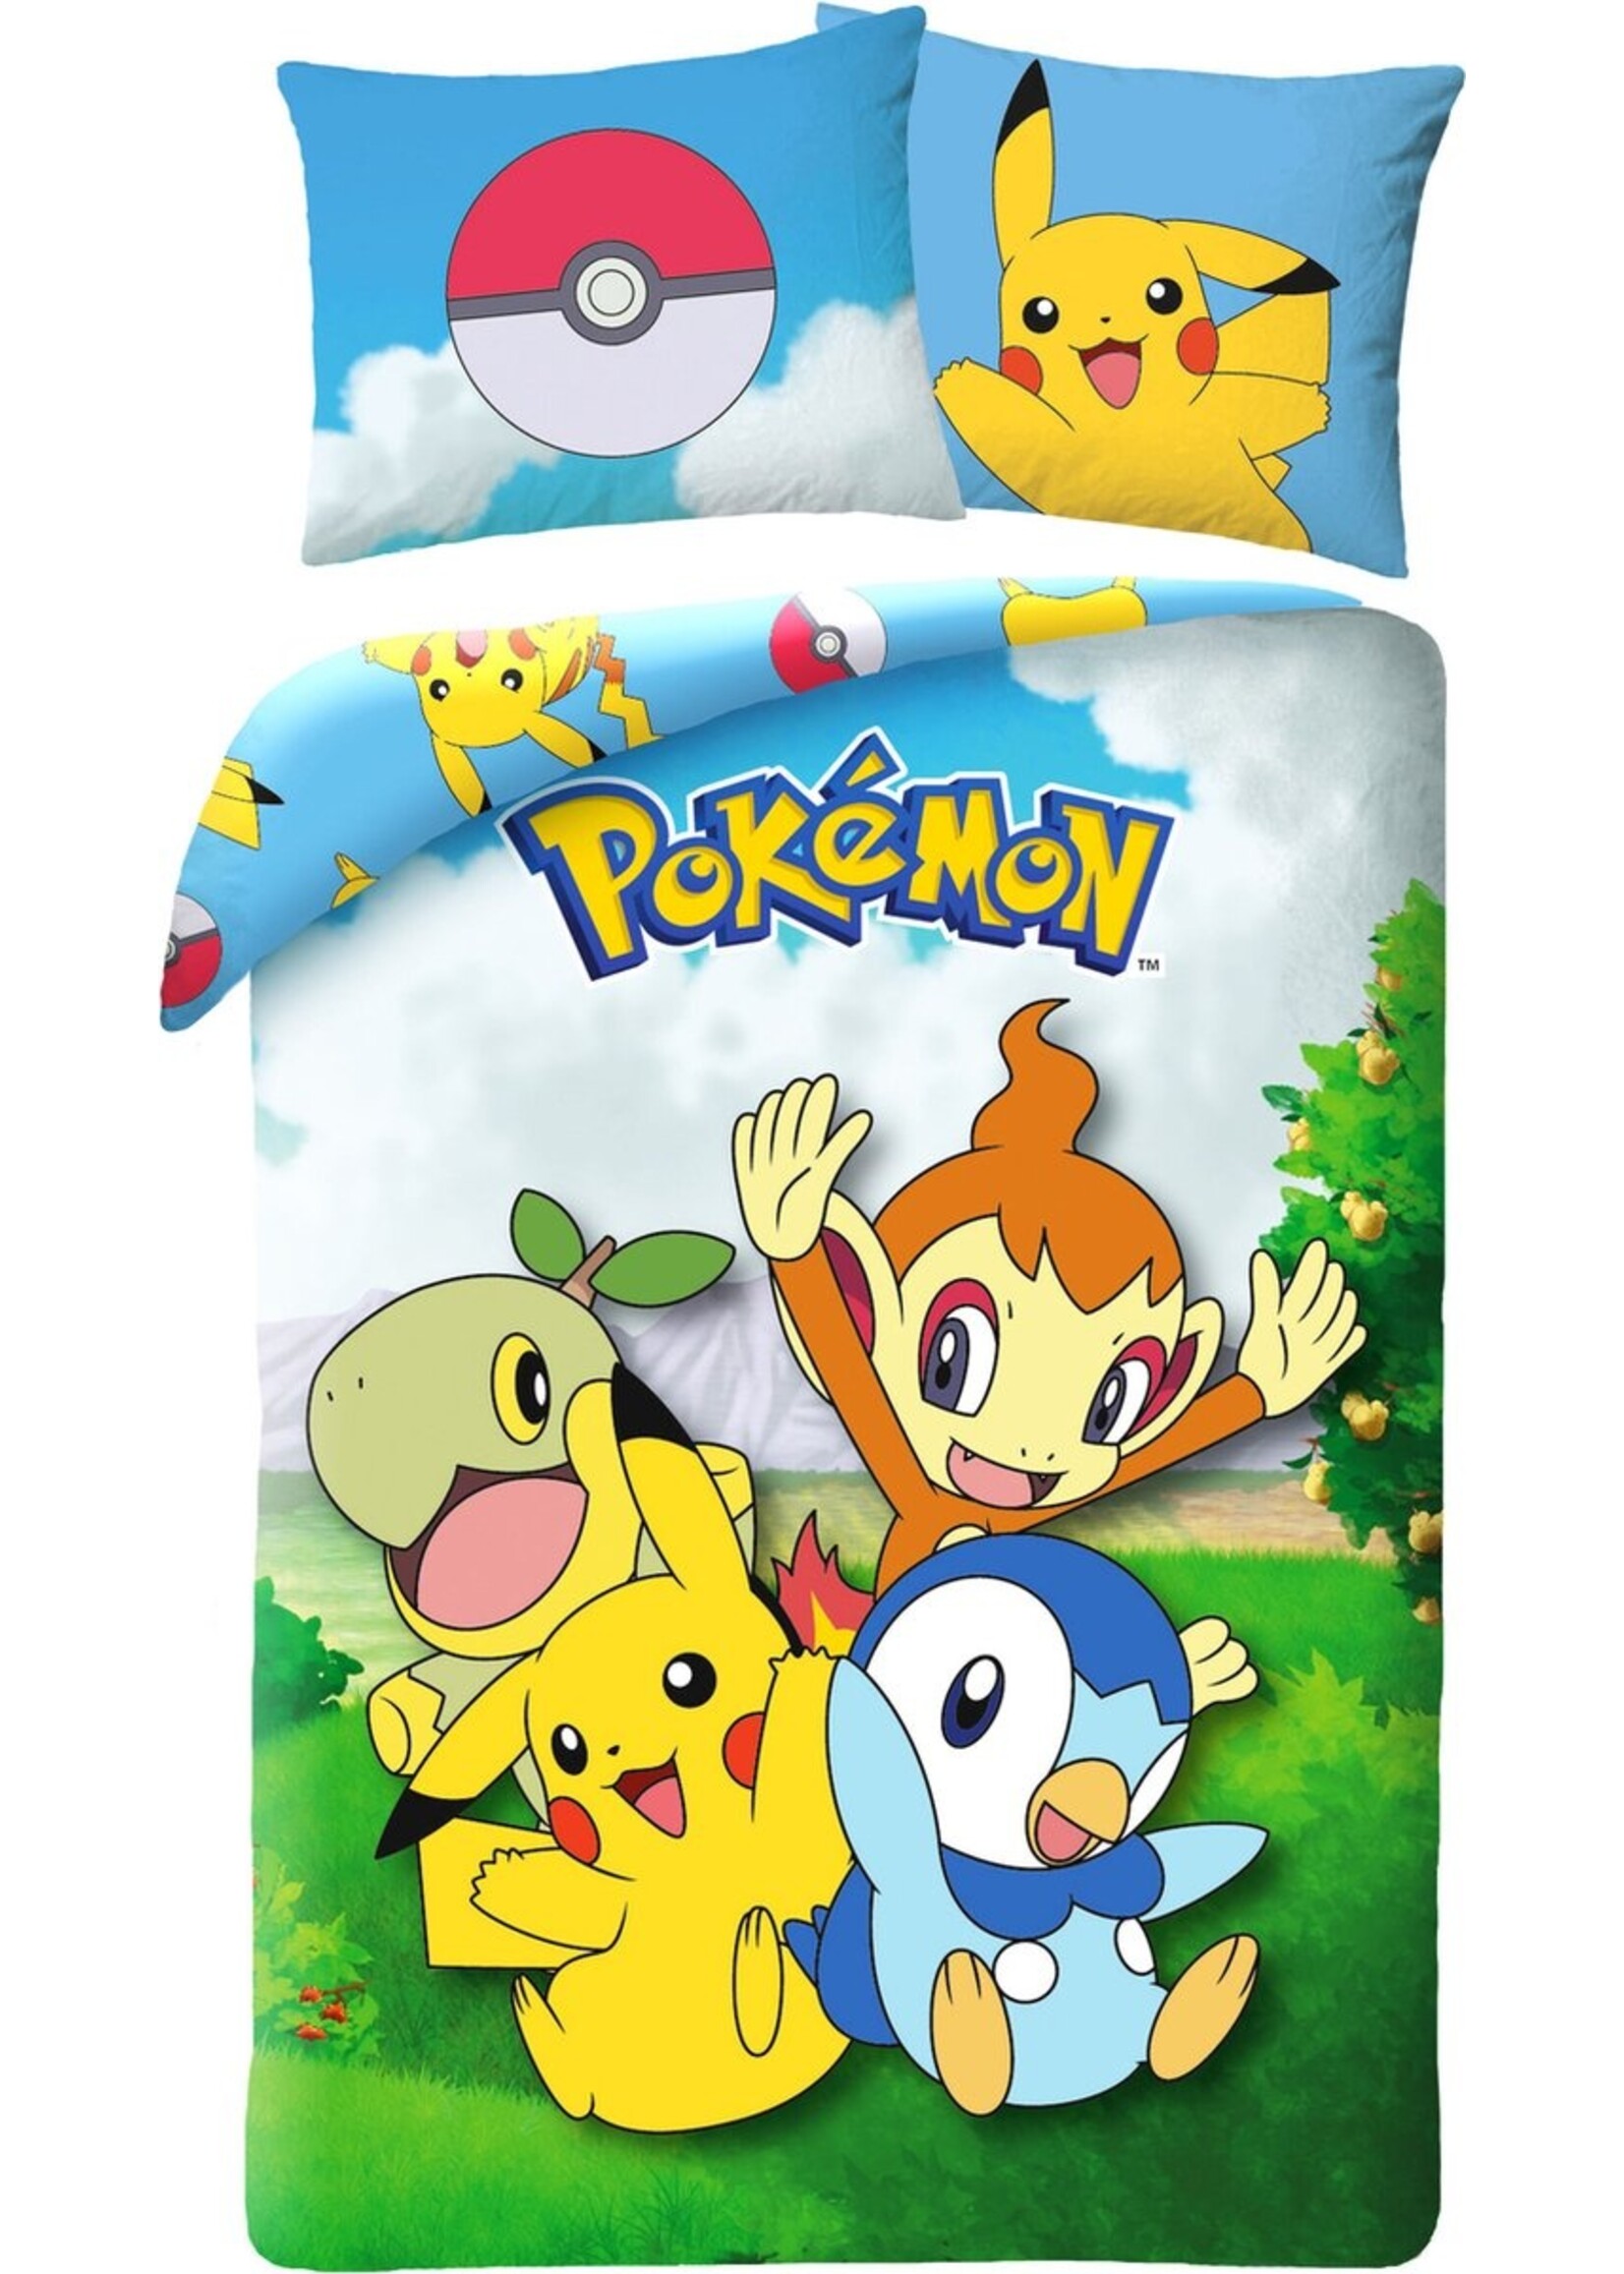 Pokémon Pokemon Duvet Cover Set